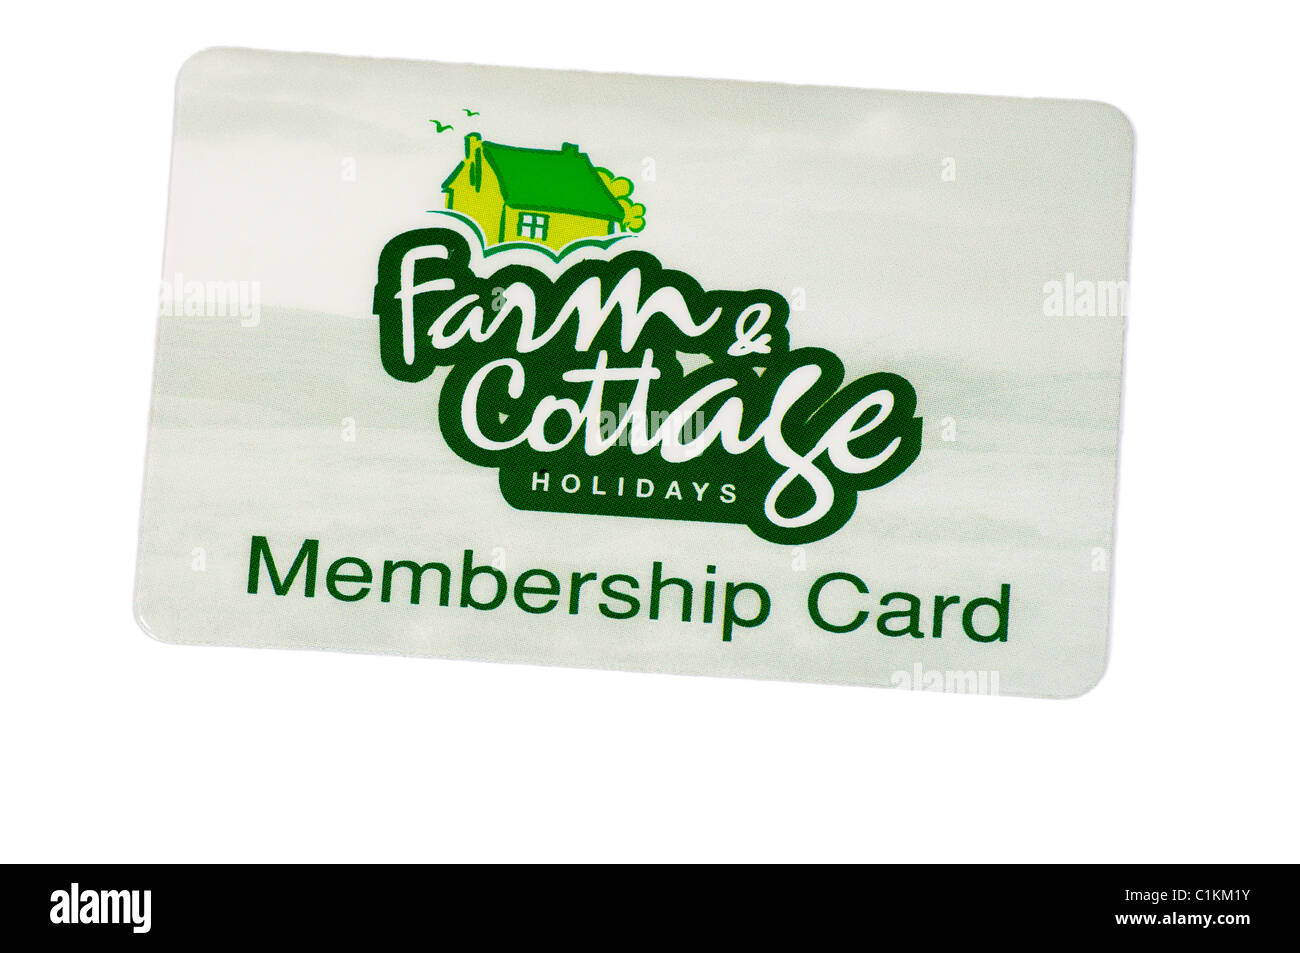 Farm and Cottage Holidays Membership Card Stock Photo